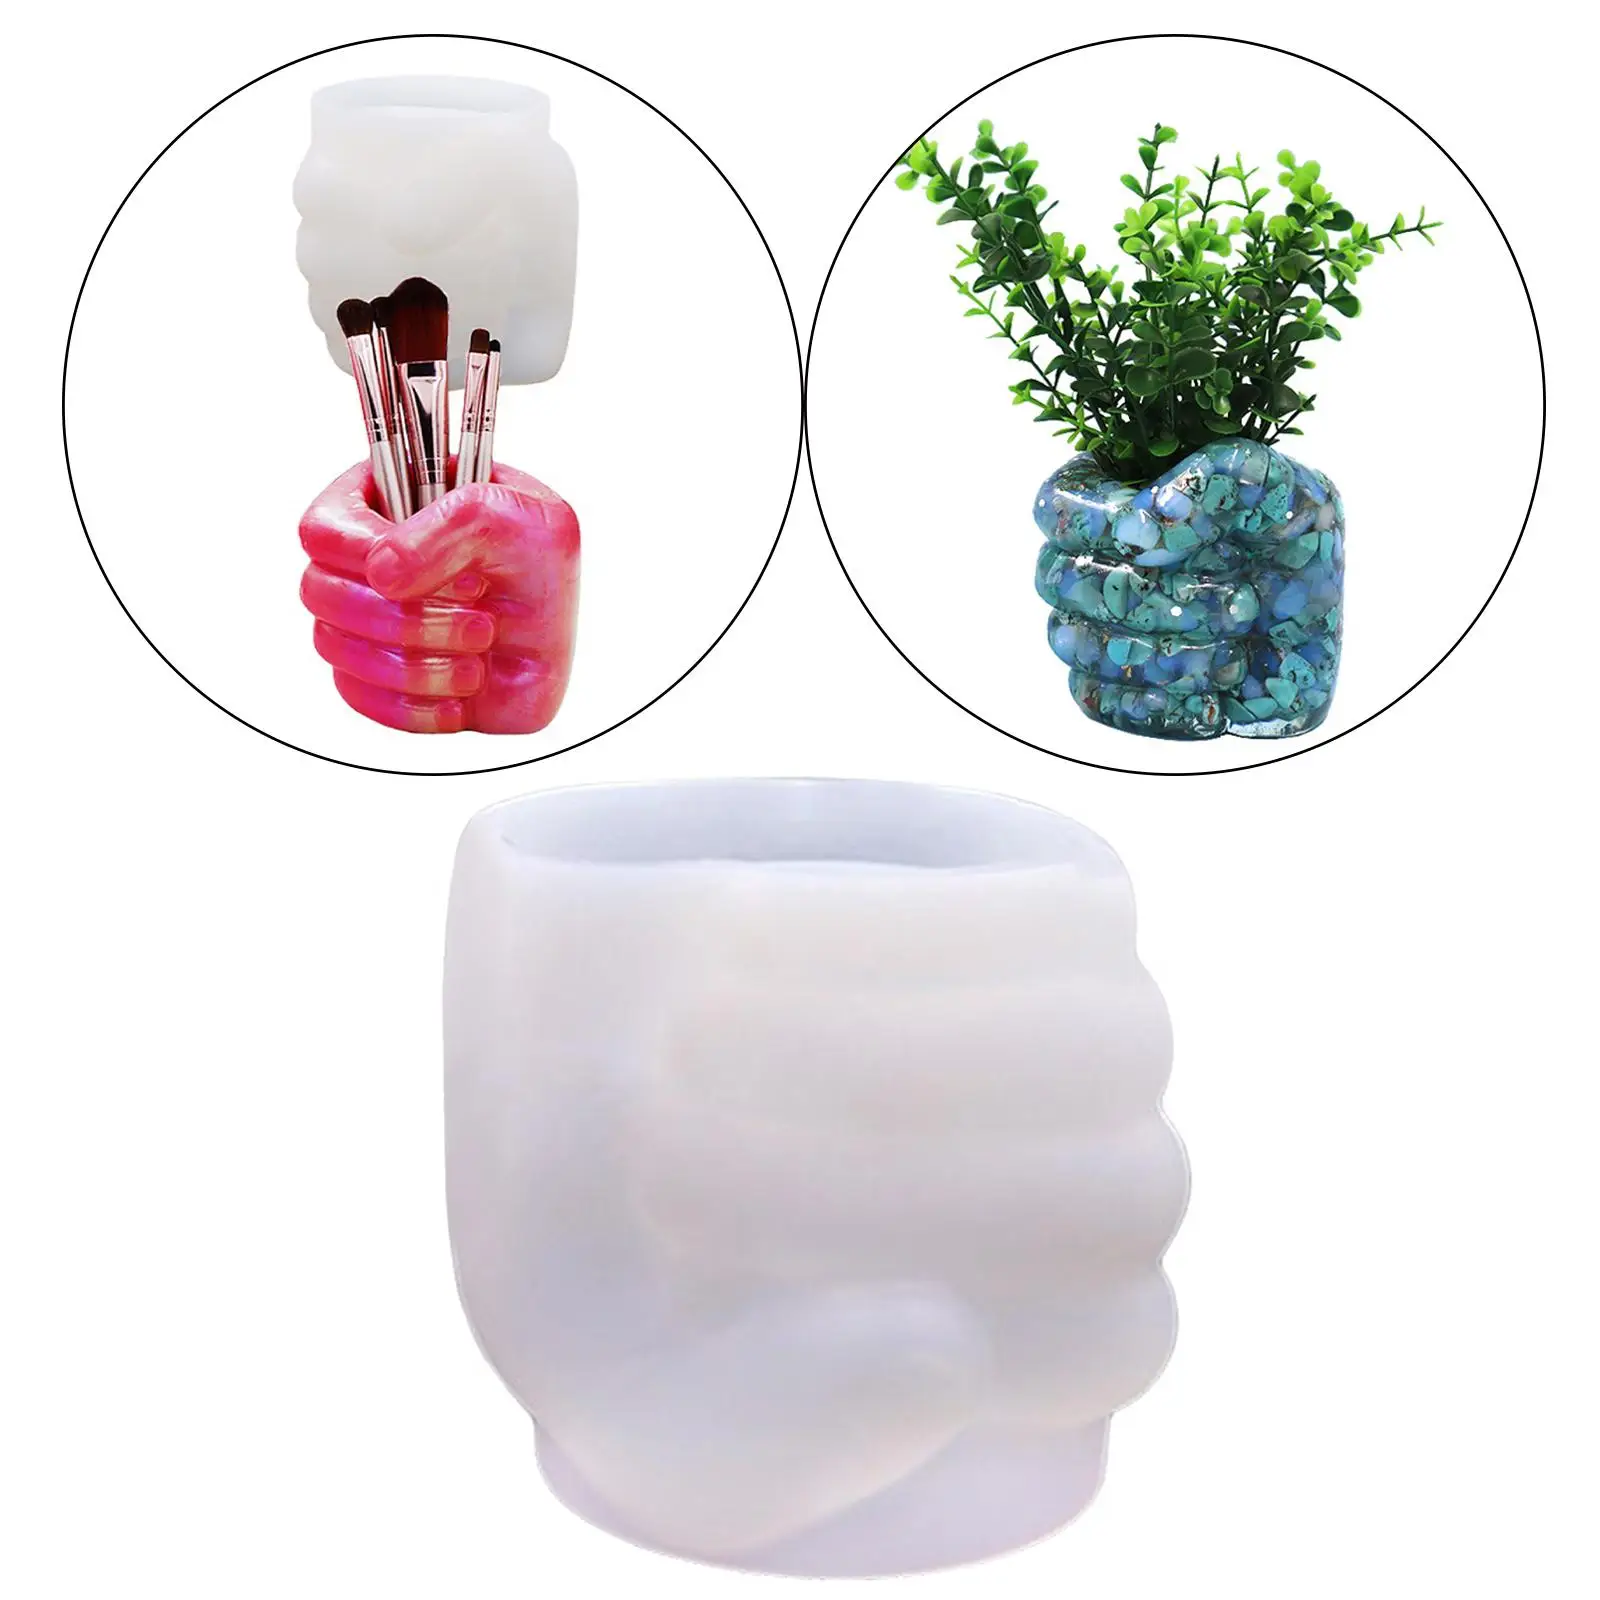 Silicone Pen Holder Mold Epoxy Resin Flower Pot Mould Vase Mold Home Decor Crafts Making Handmade Art DIY Supplies